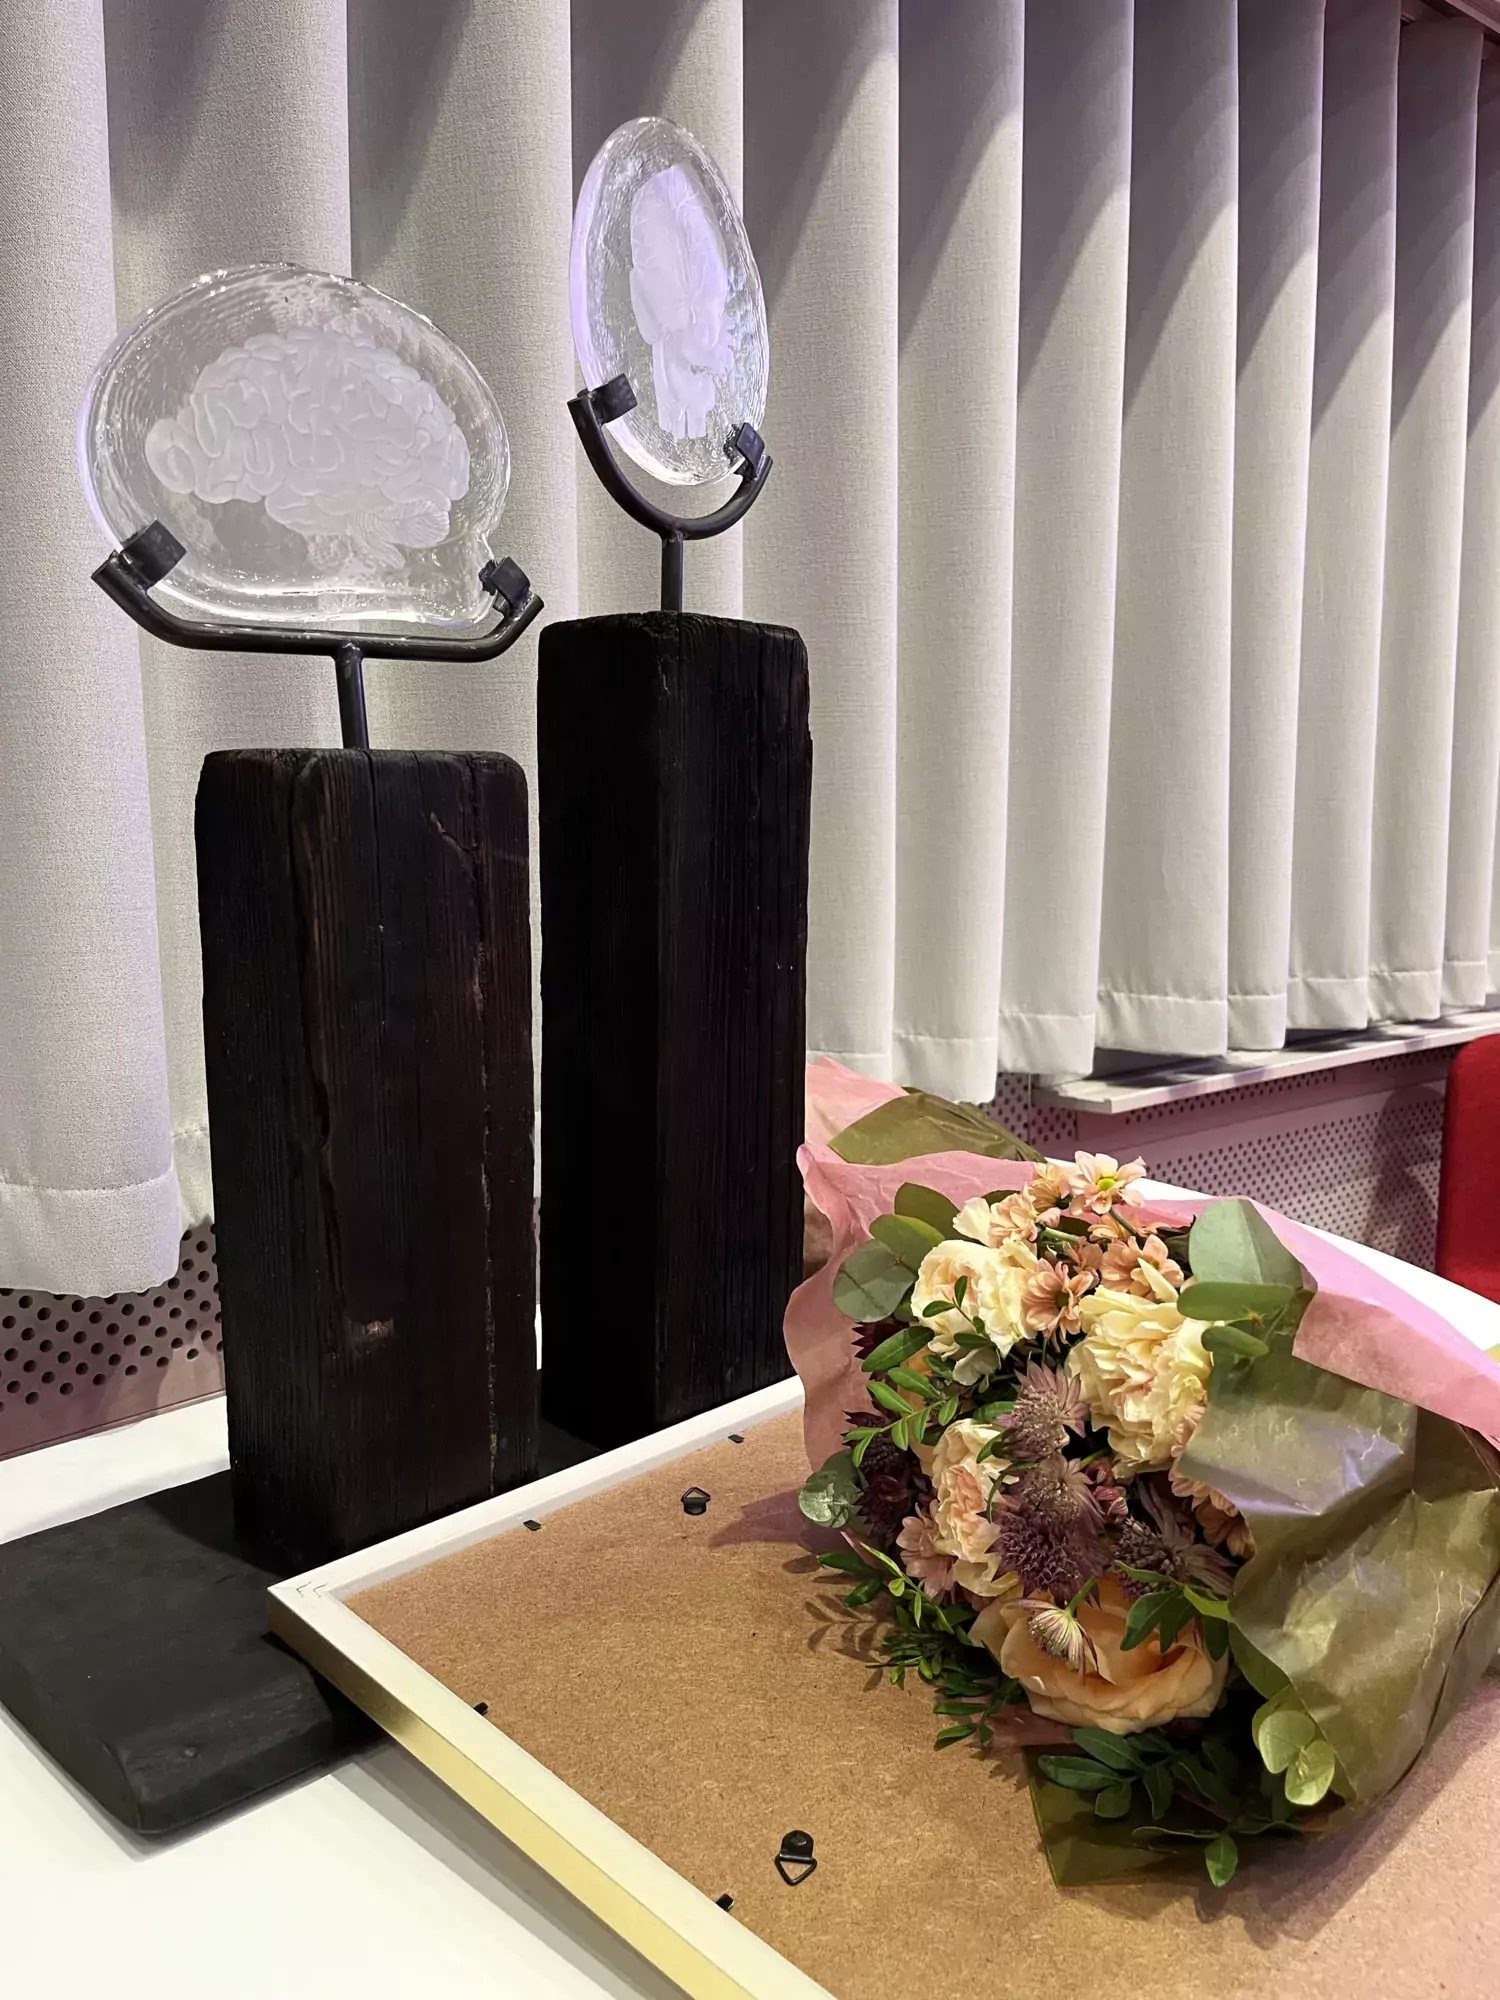 The glass sculpture KLOK prize.